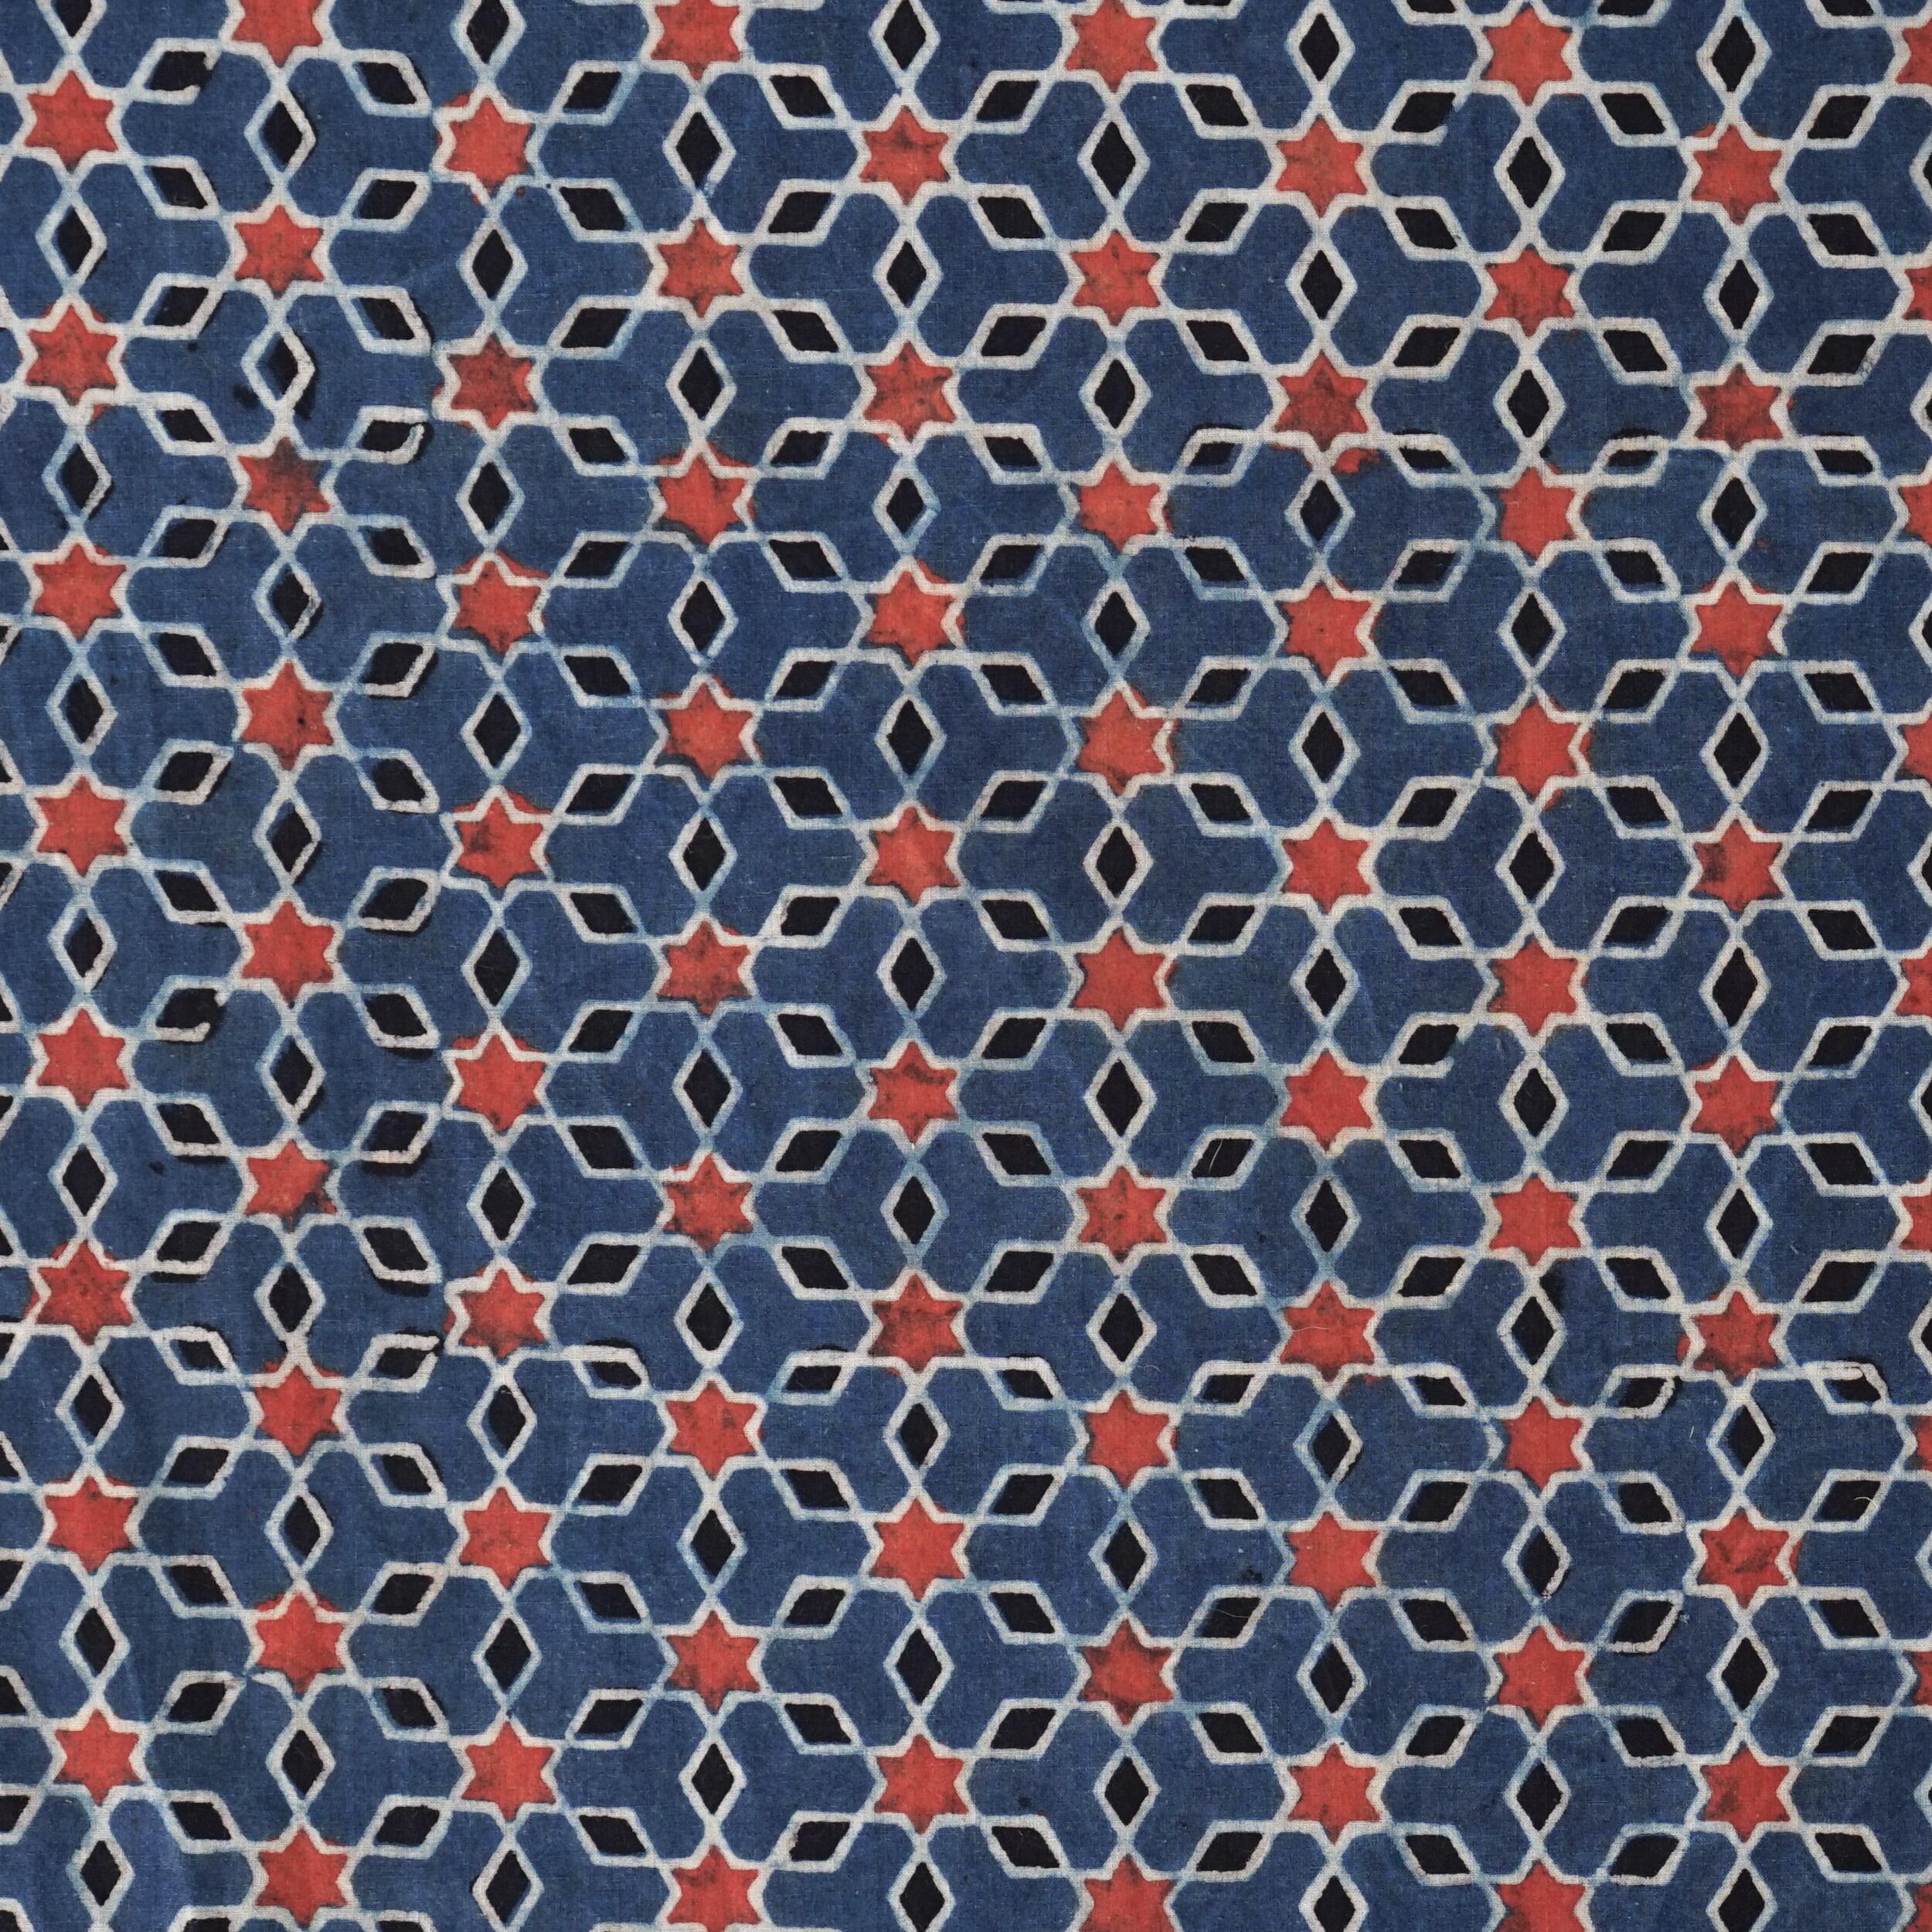 Block Printed Fabric, 100% Cotton, Ajrak Design: Blue Indigo Base, Black Leaf, Red Star. Flat